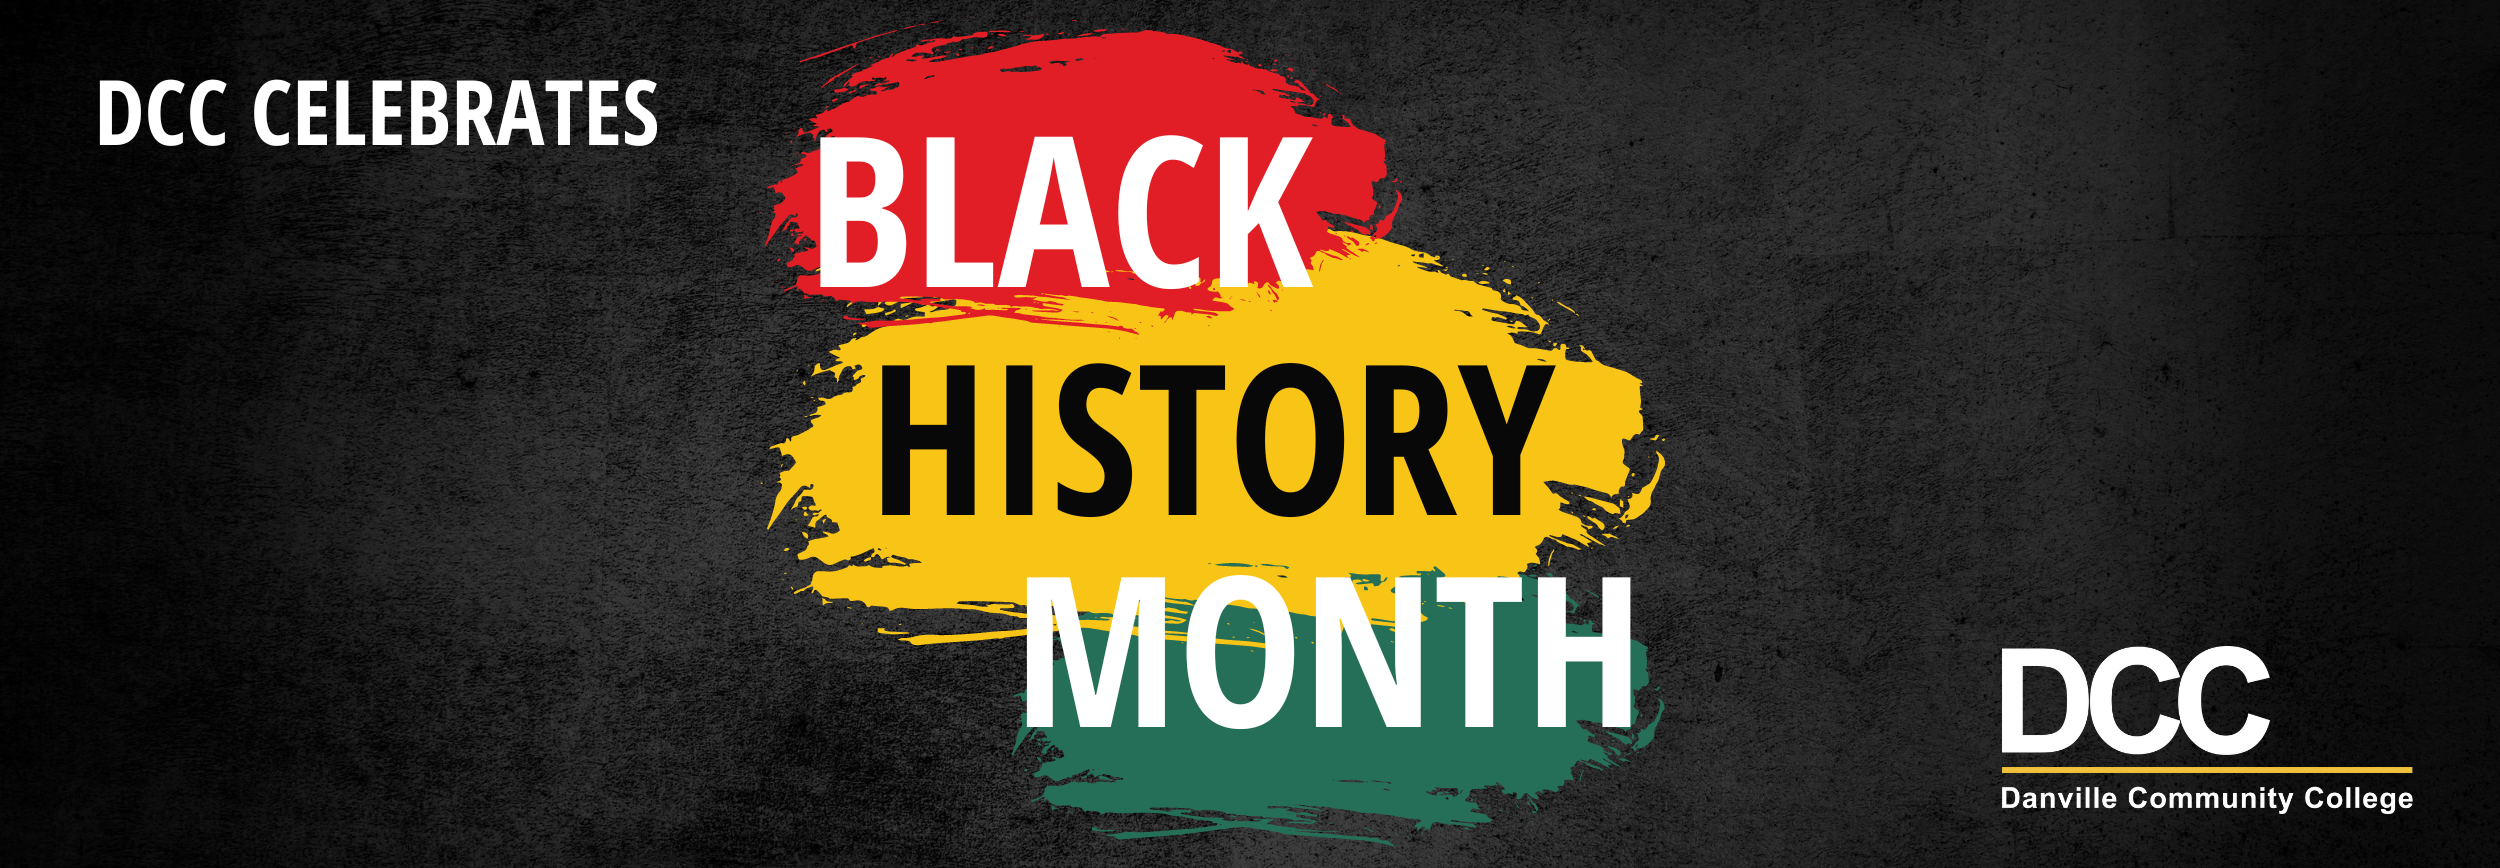 DCC - Black History Month 